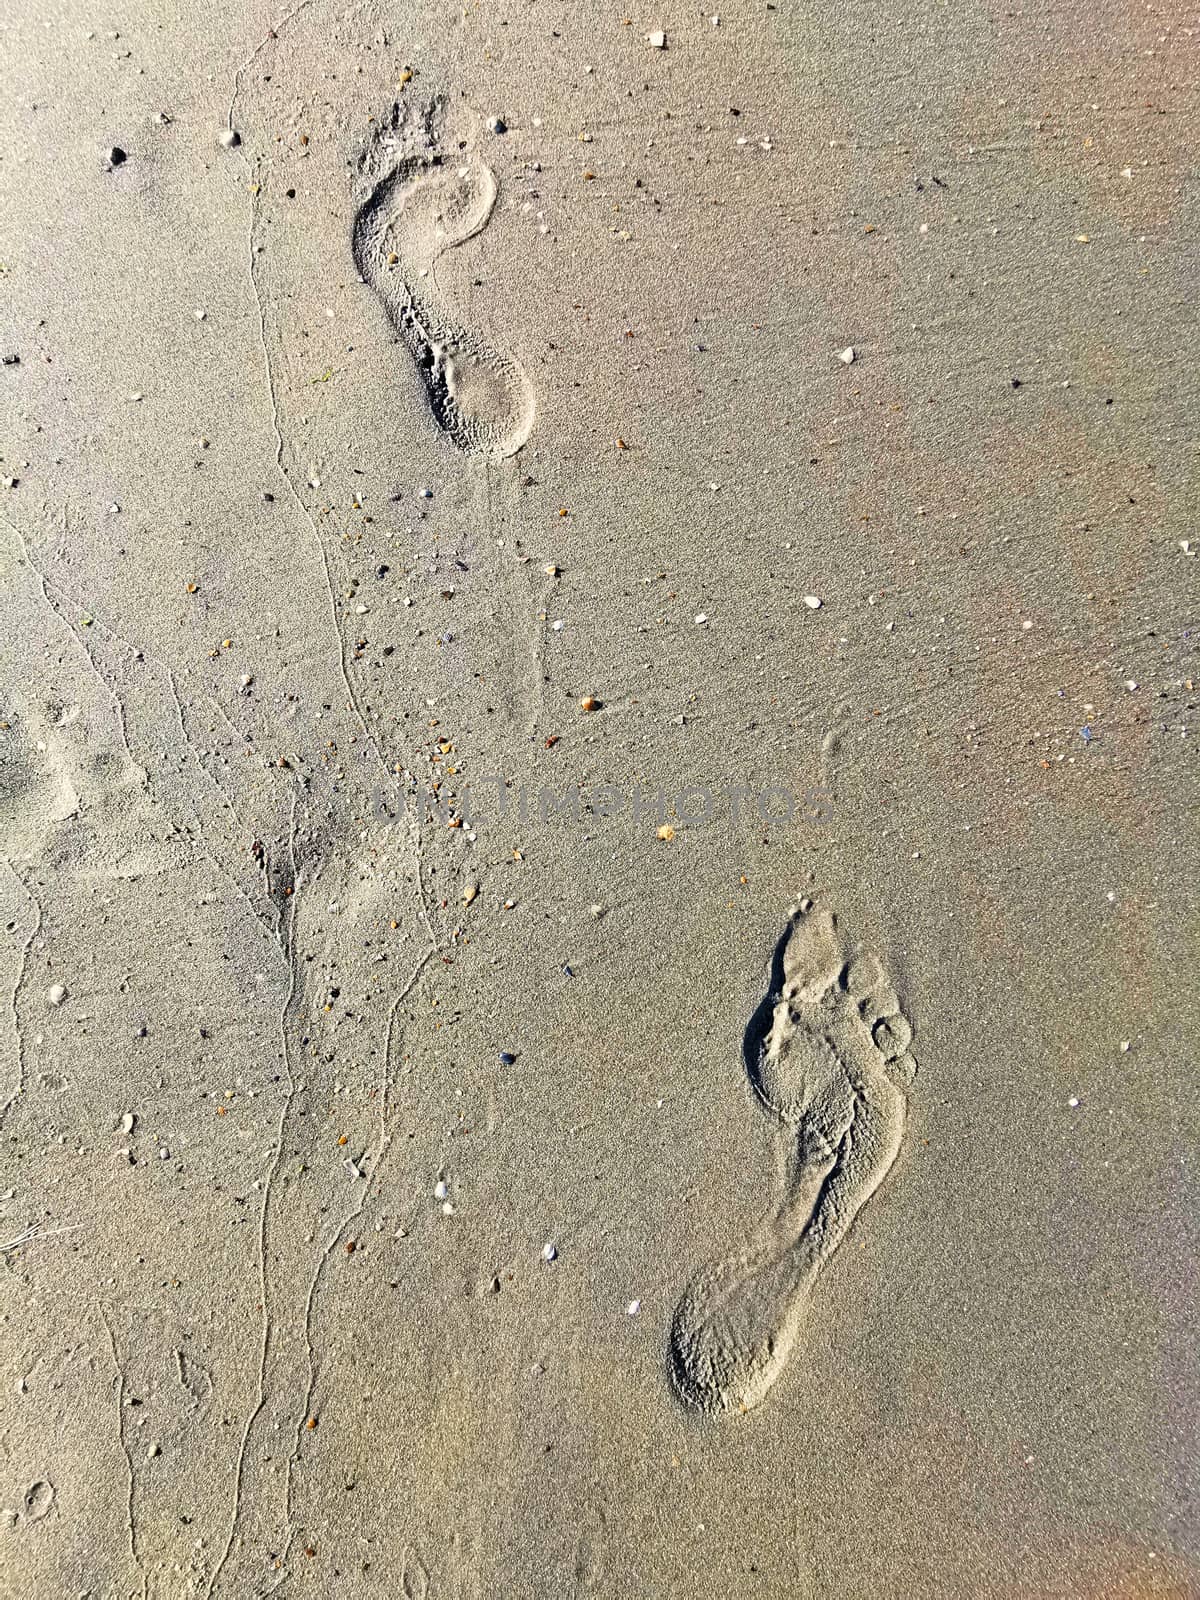 Foot step on wet sandy beach, close image